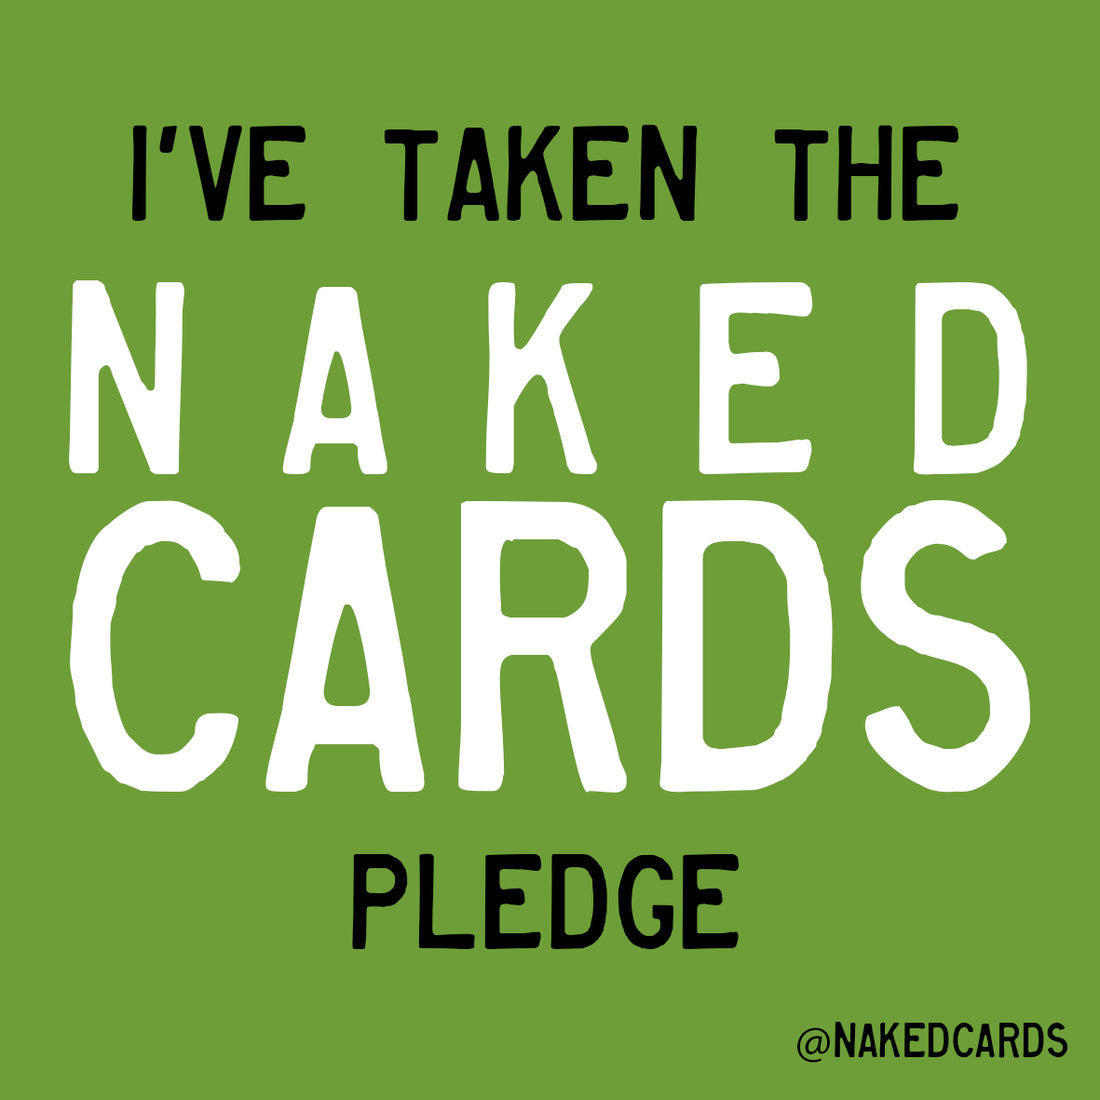 naked cards pledge